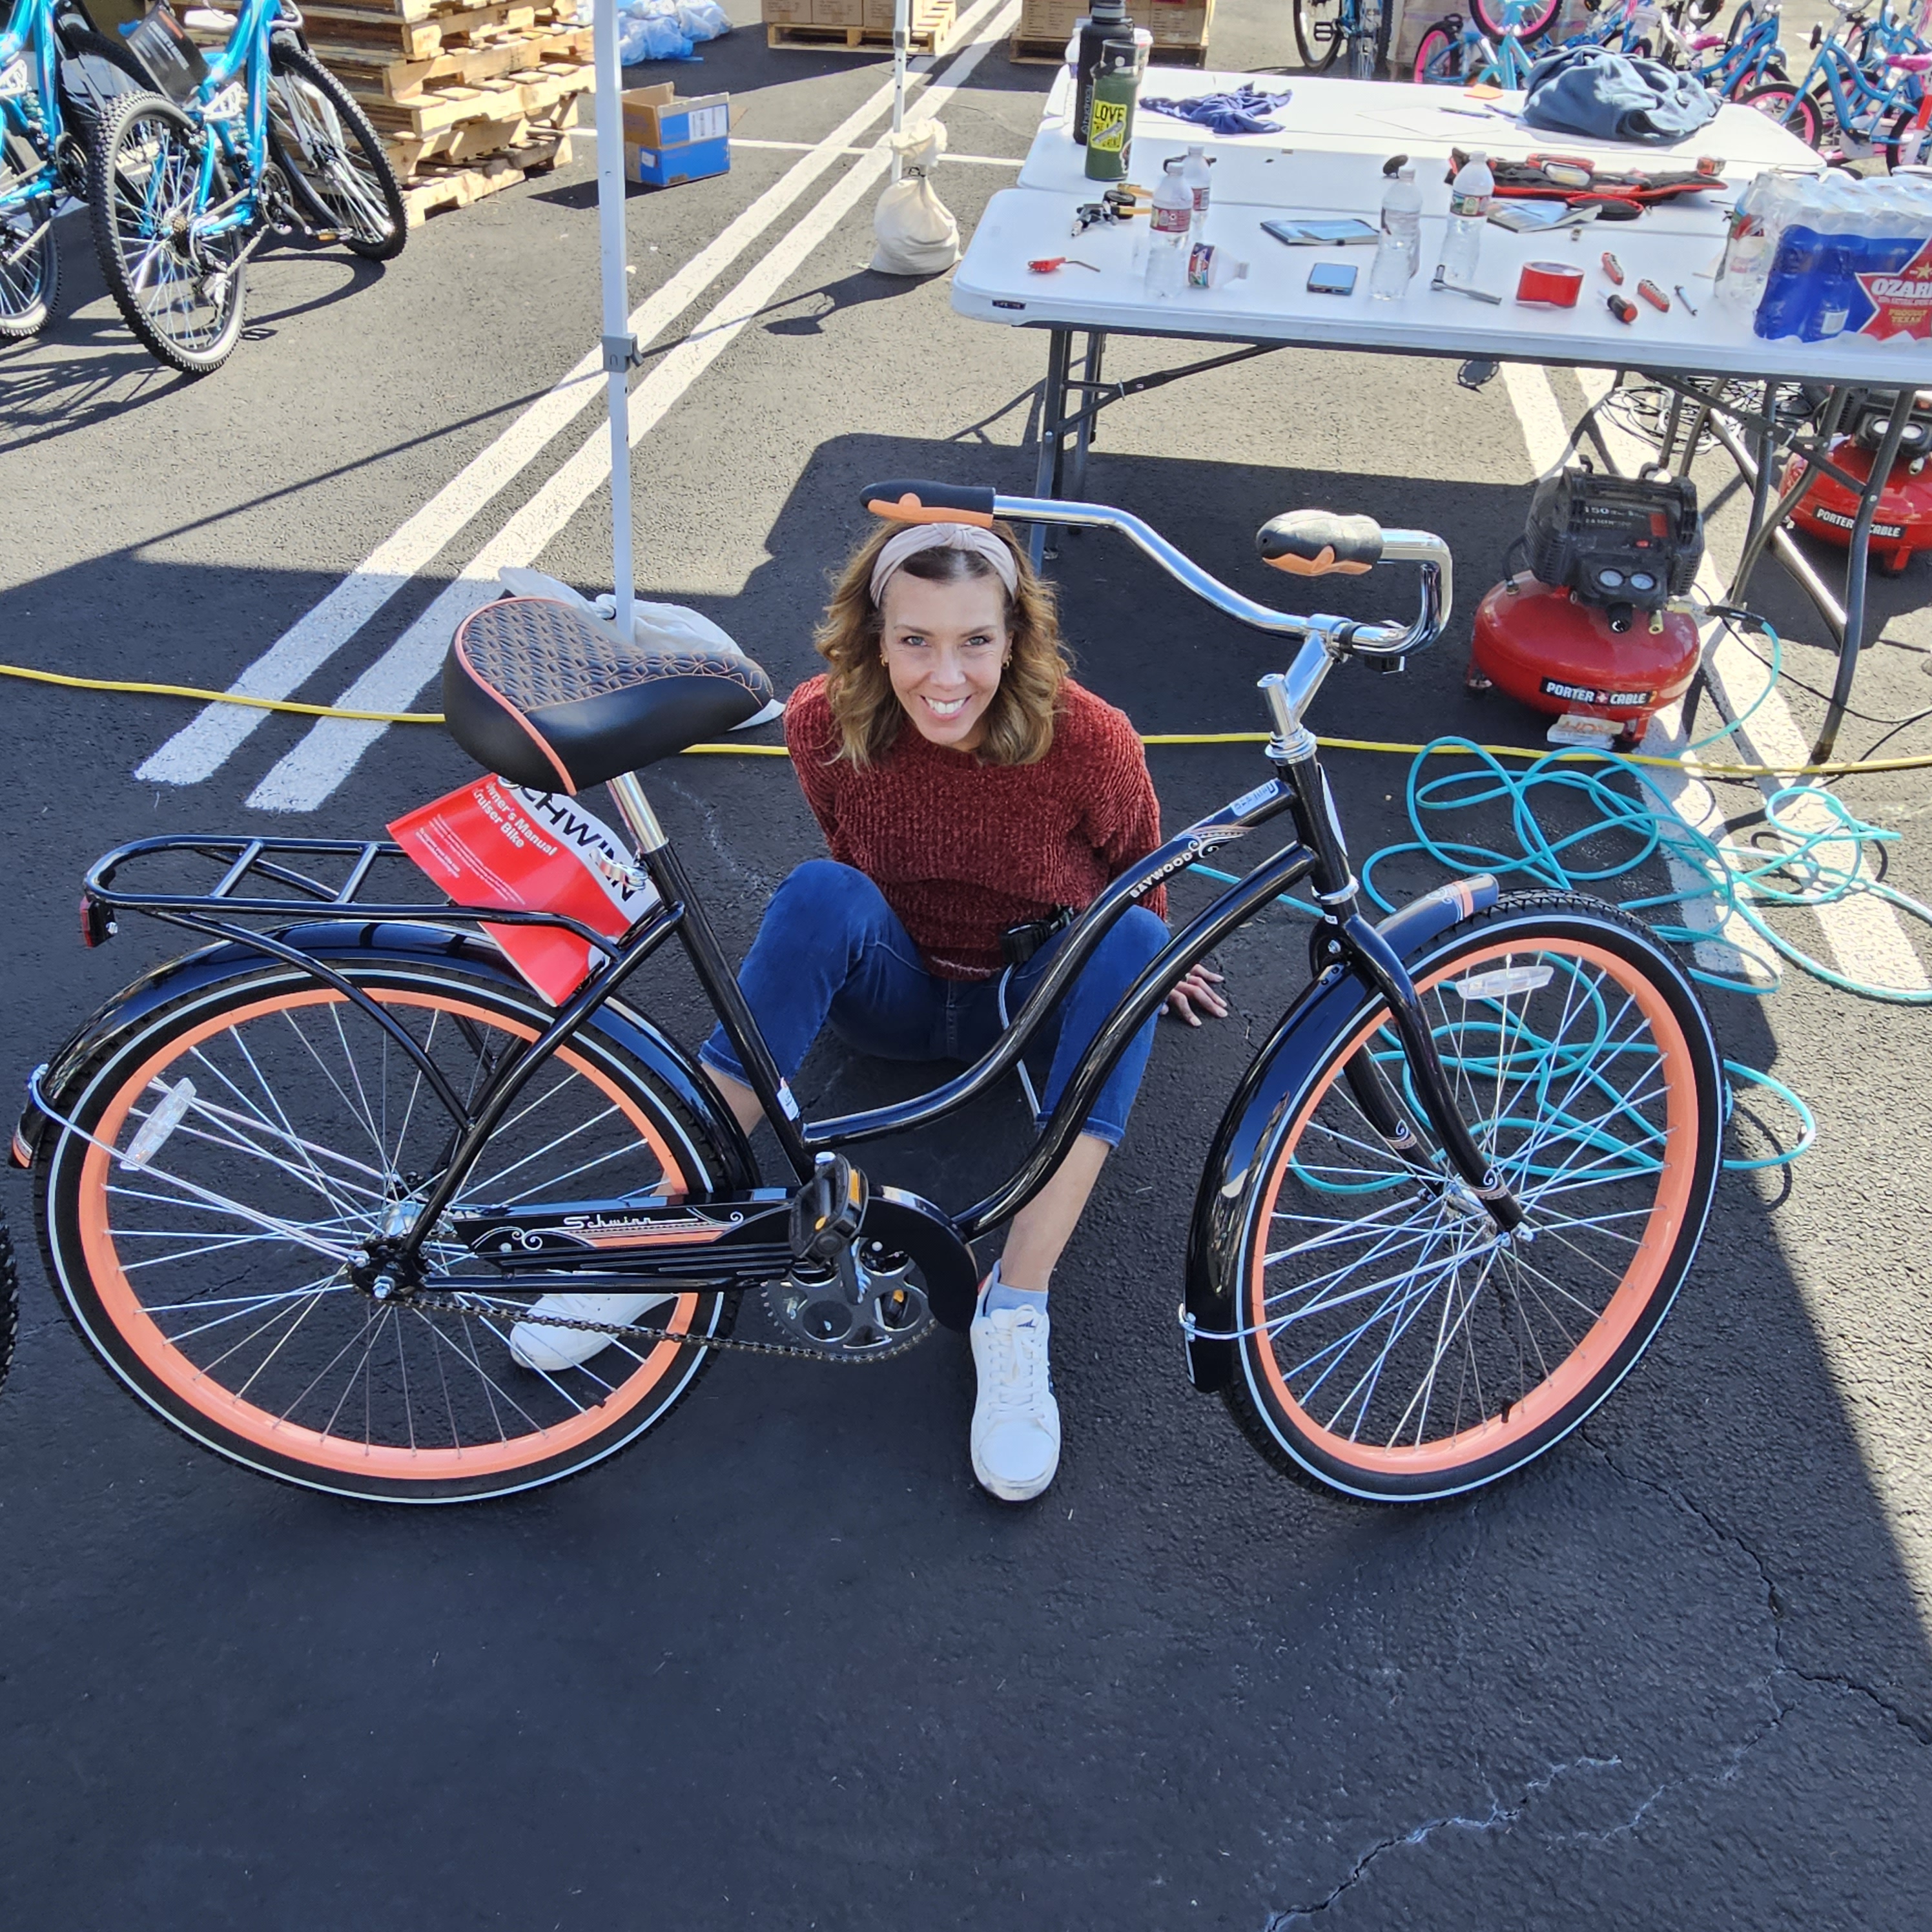 Associa Donates 300 Bikes To Disadvantaged Kids